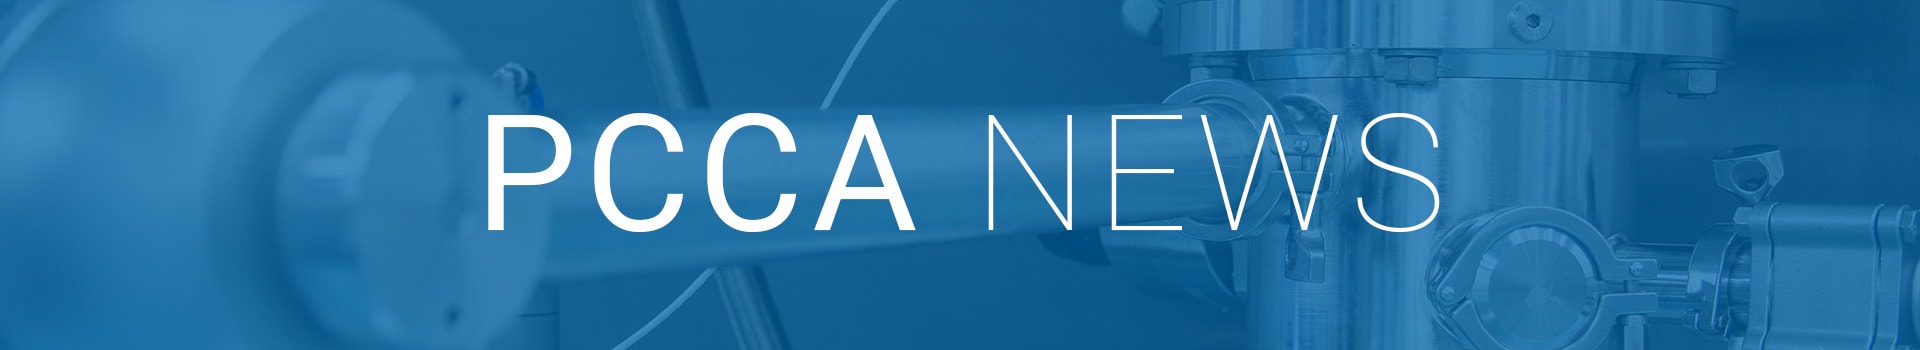 PCCA News and Updates